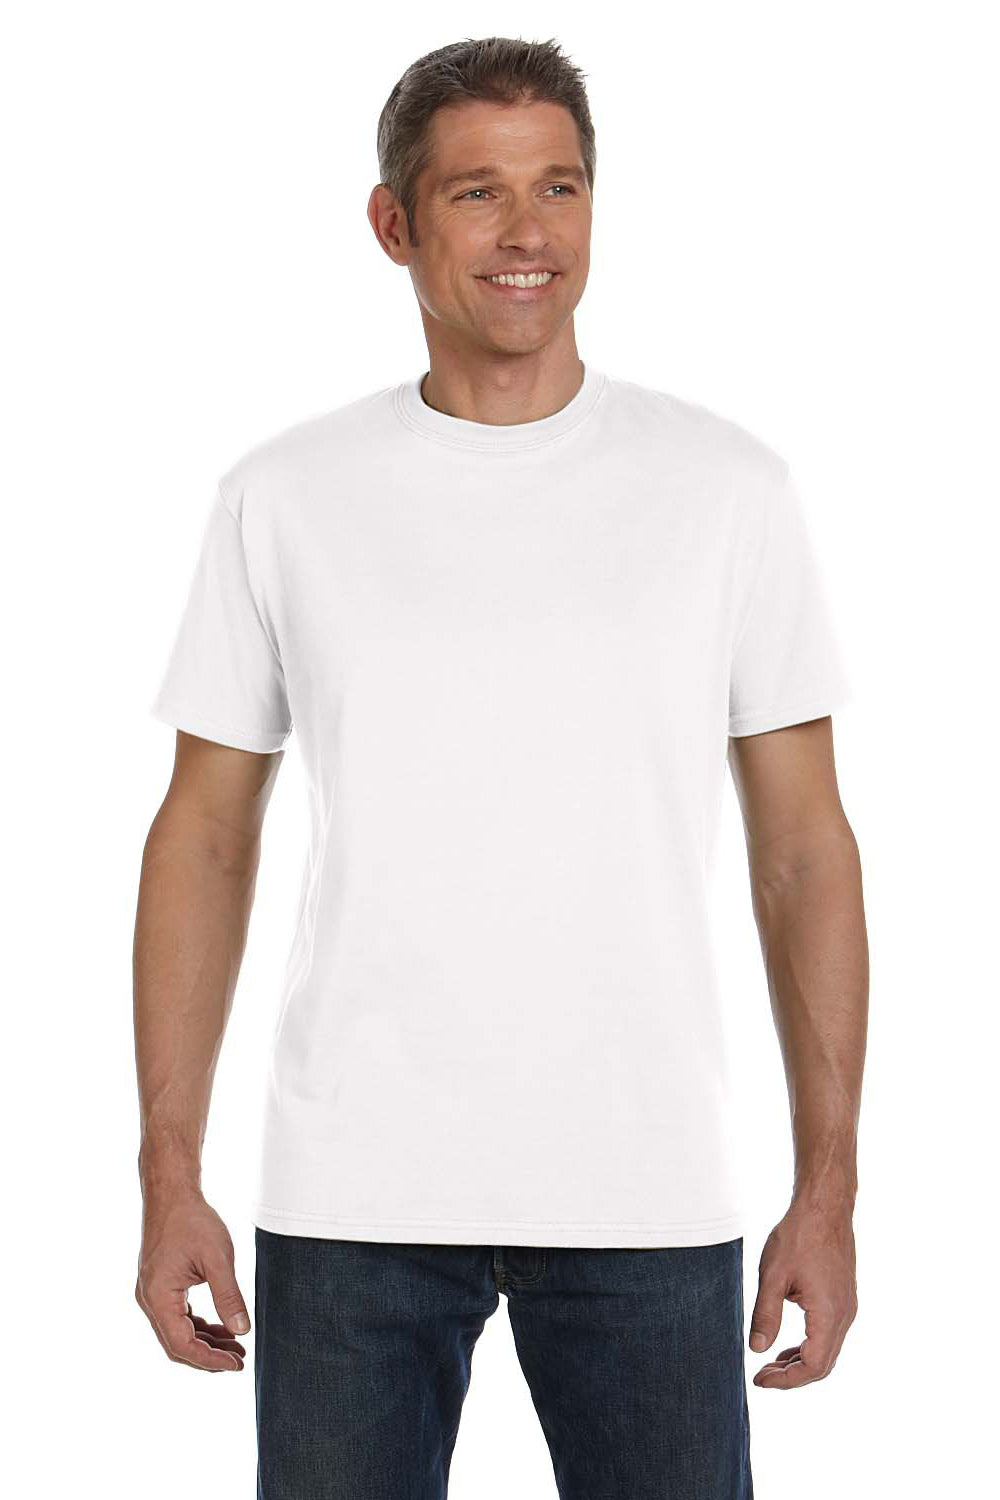 Econscious EC1000 Mens Short Sleeve Crewneck T-Shirt White Front